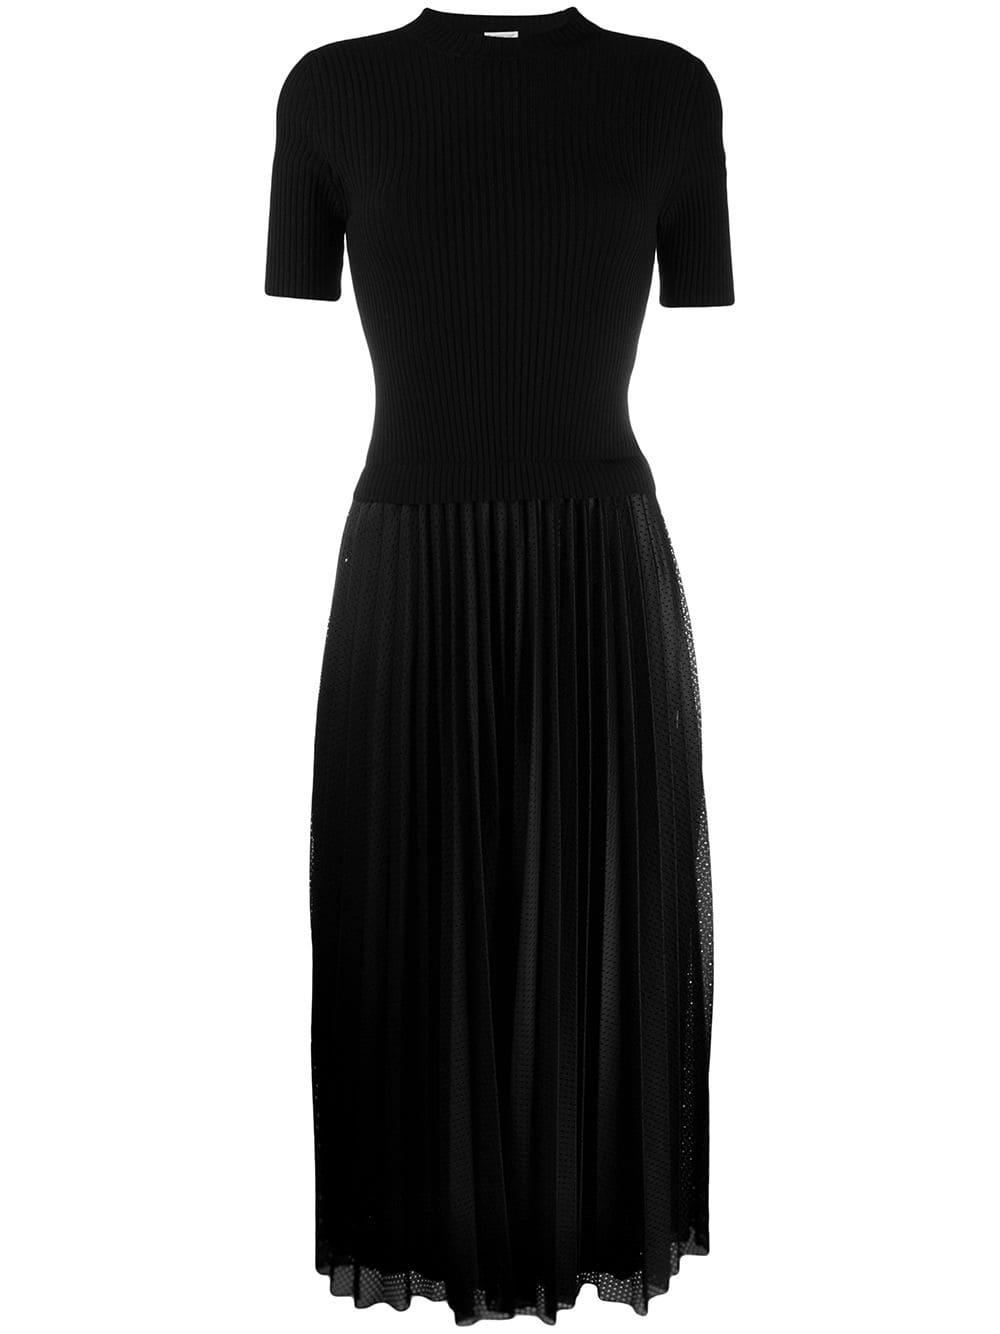 Moncler Wool Jumper Pleated Dress in Black - Lyst